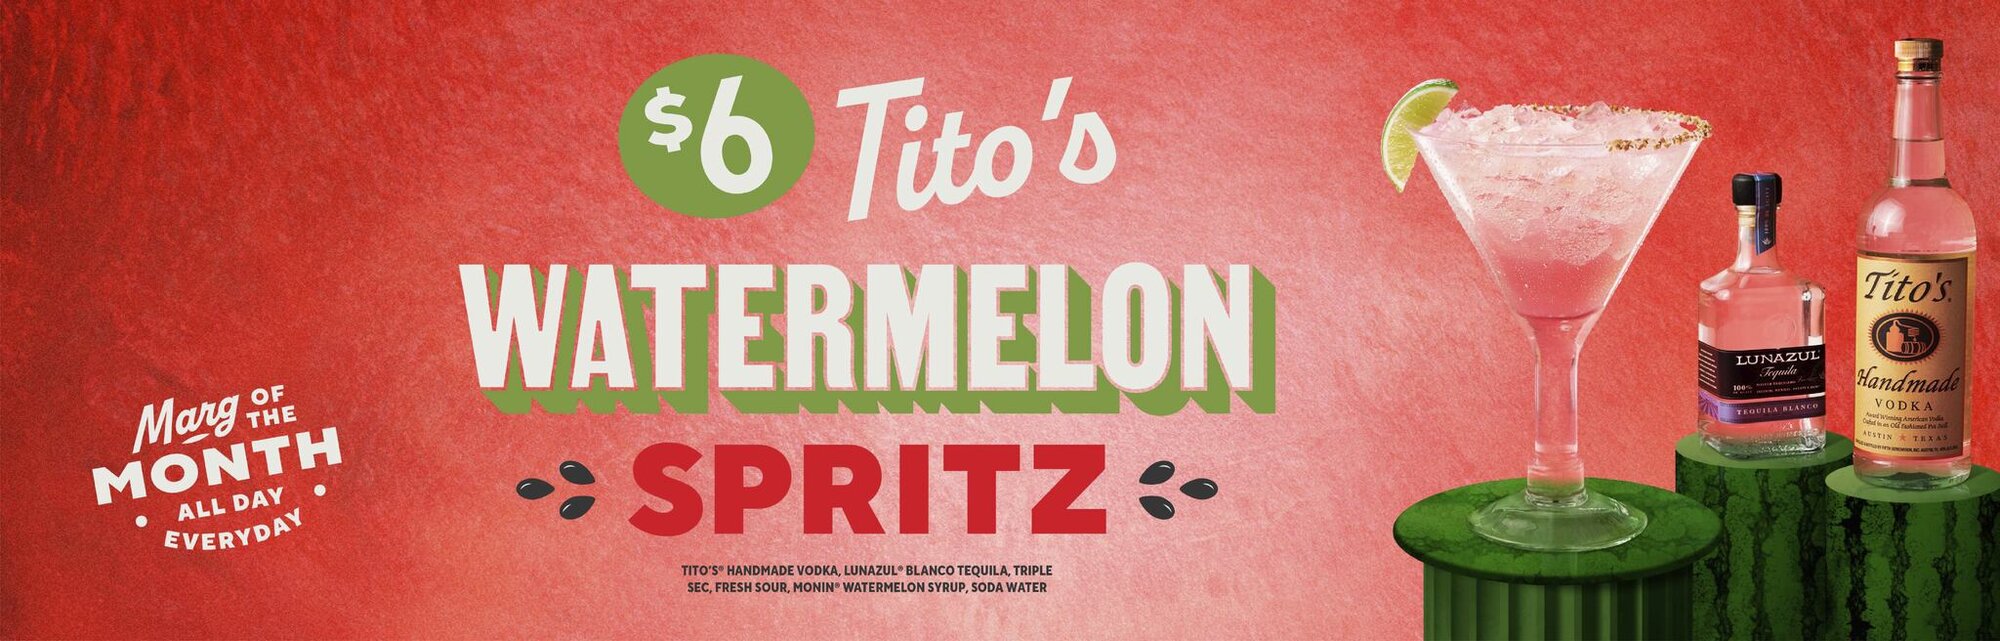 May Margarita of the Month - Chili's Tito's® Watermelon Spritz 